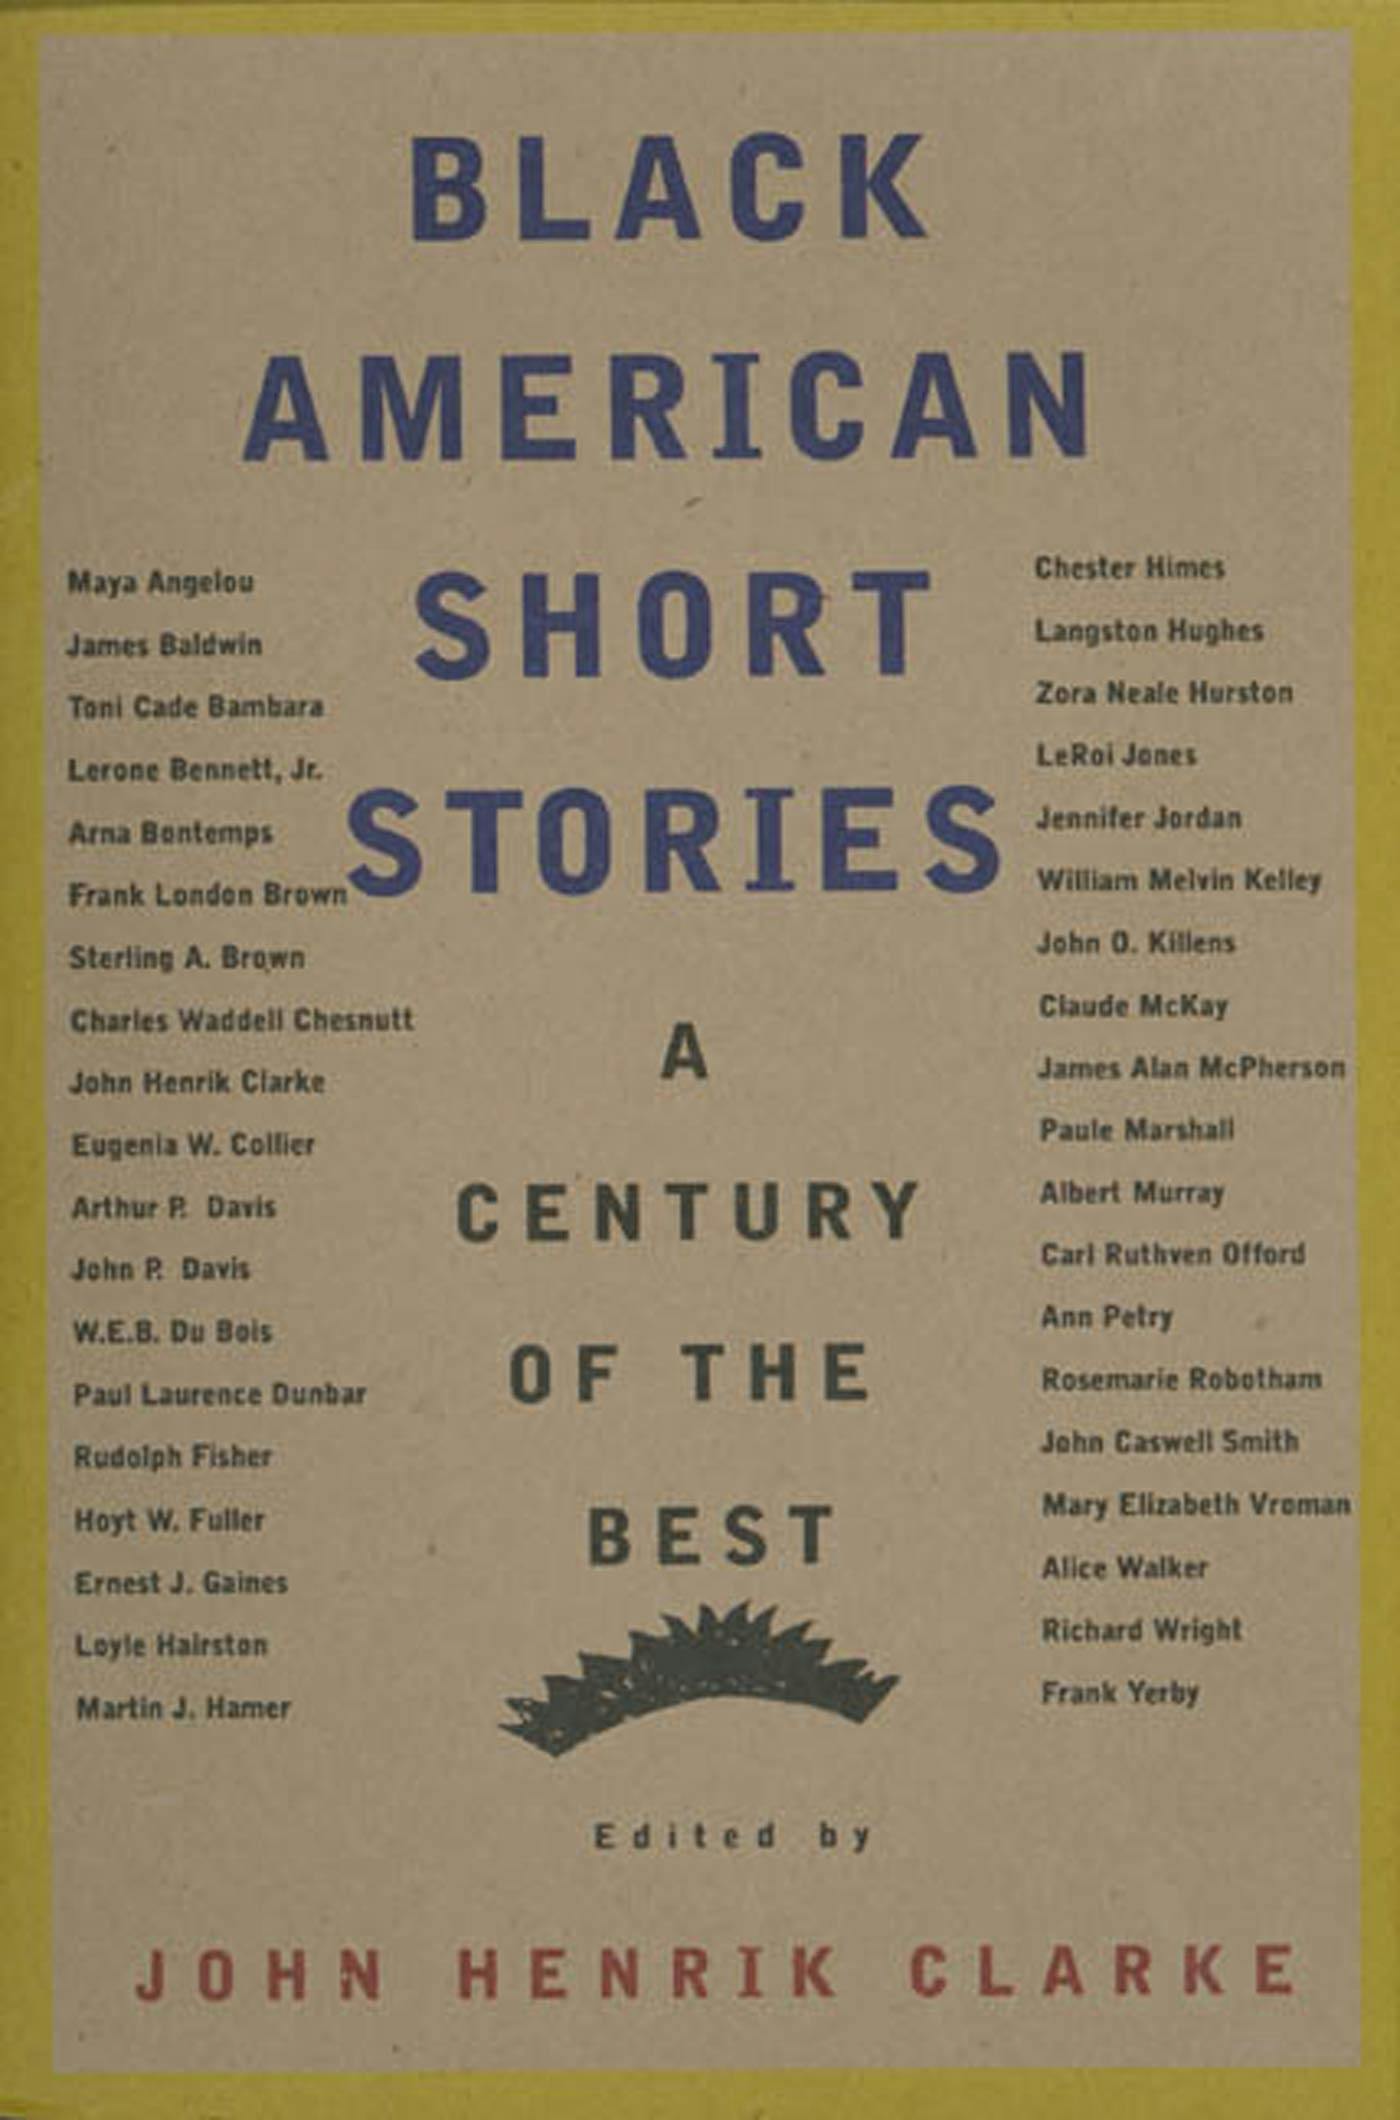 Black American Short Stories